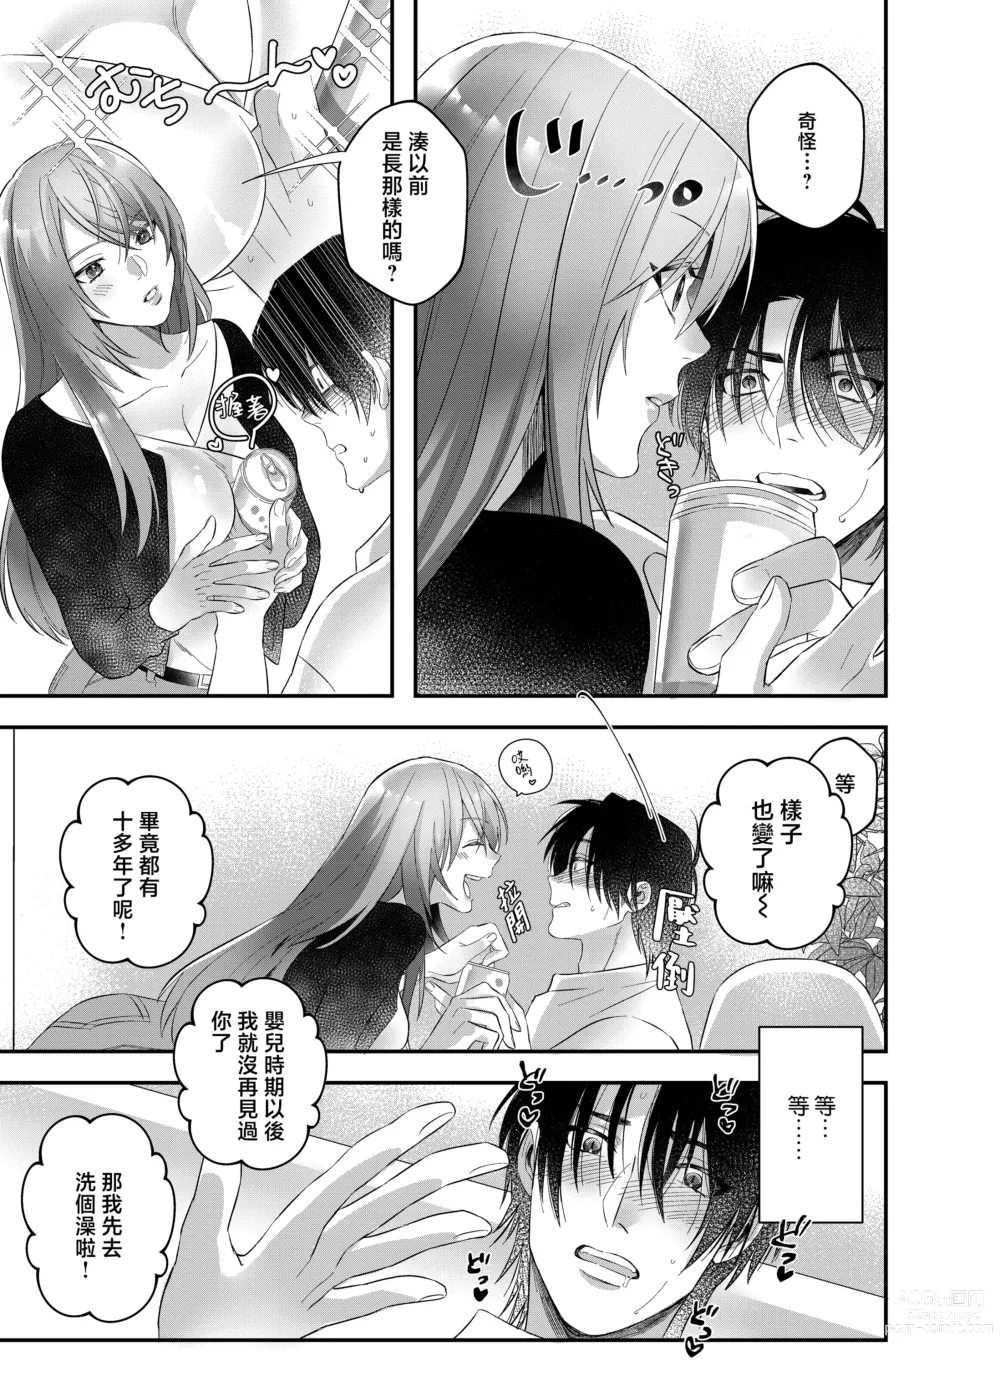 Page 13 of doujinshi 初恋淫魔是溺爱跟踪狂